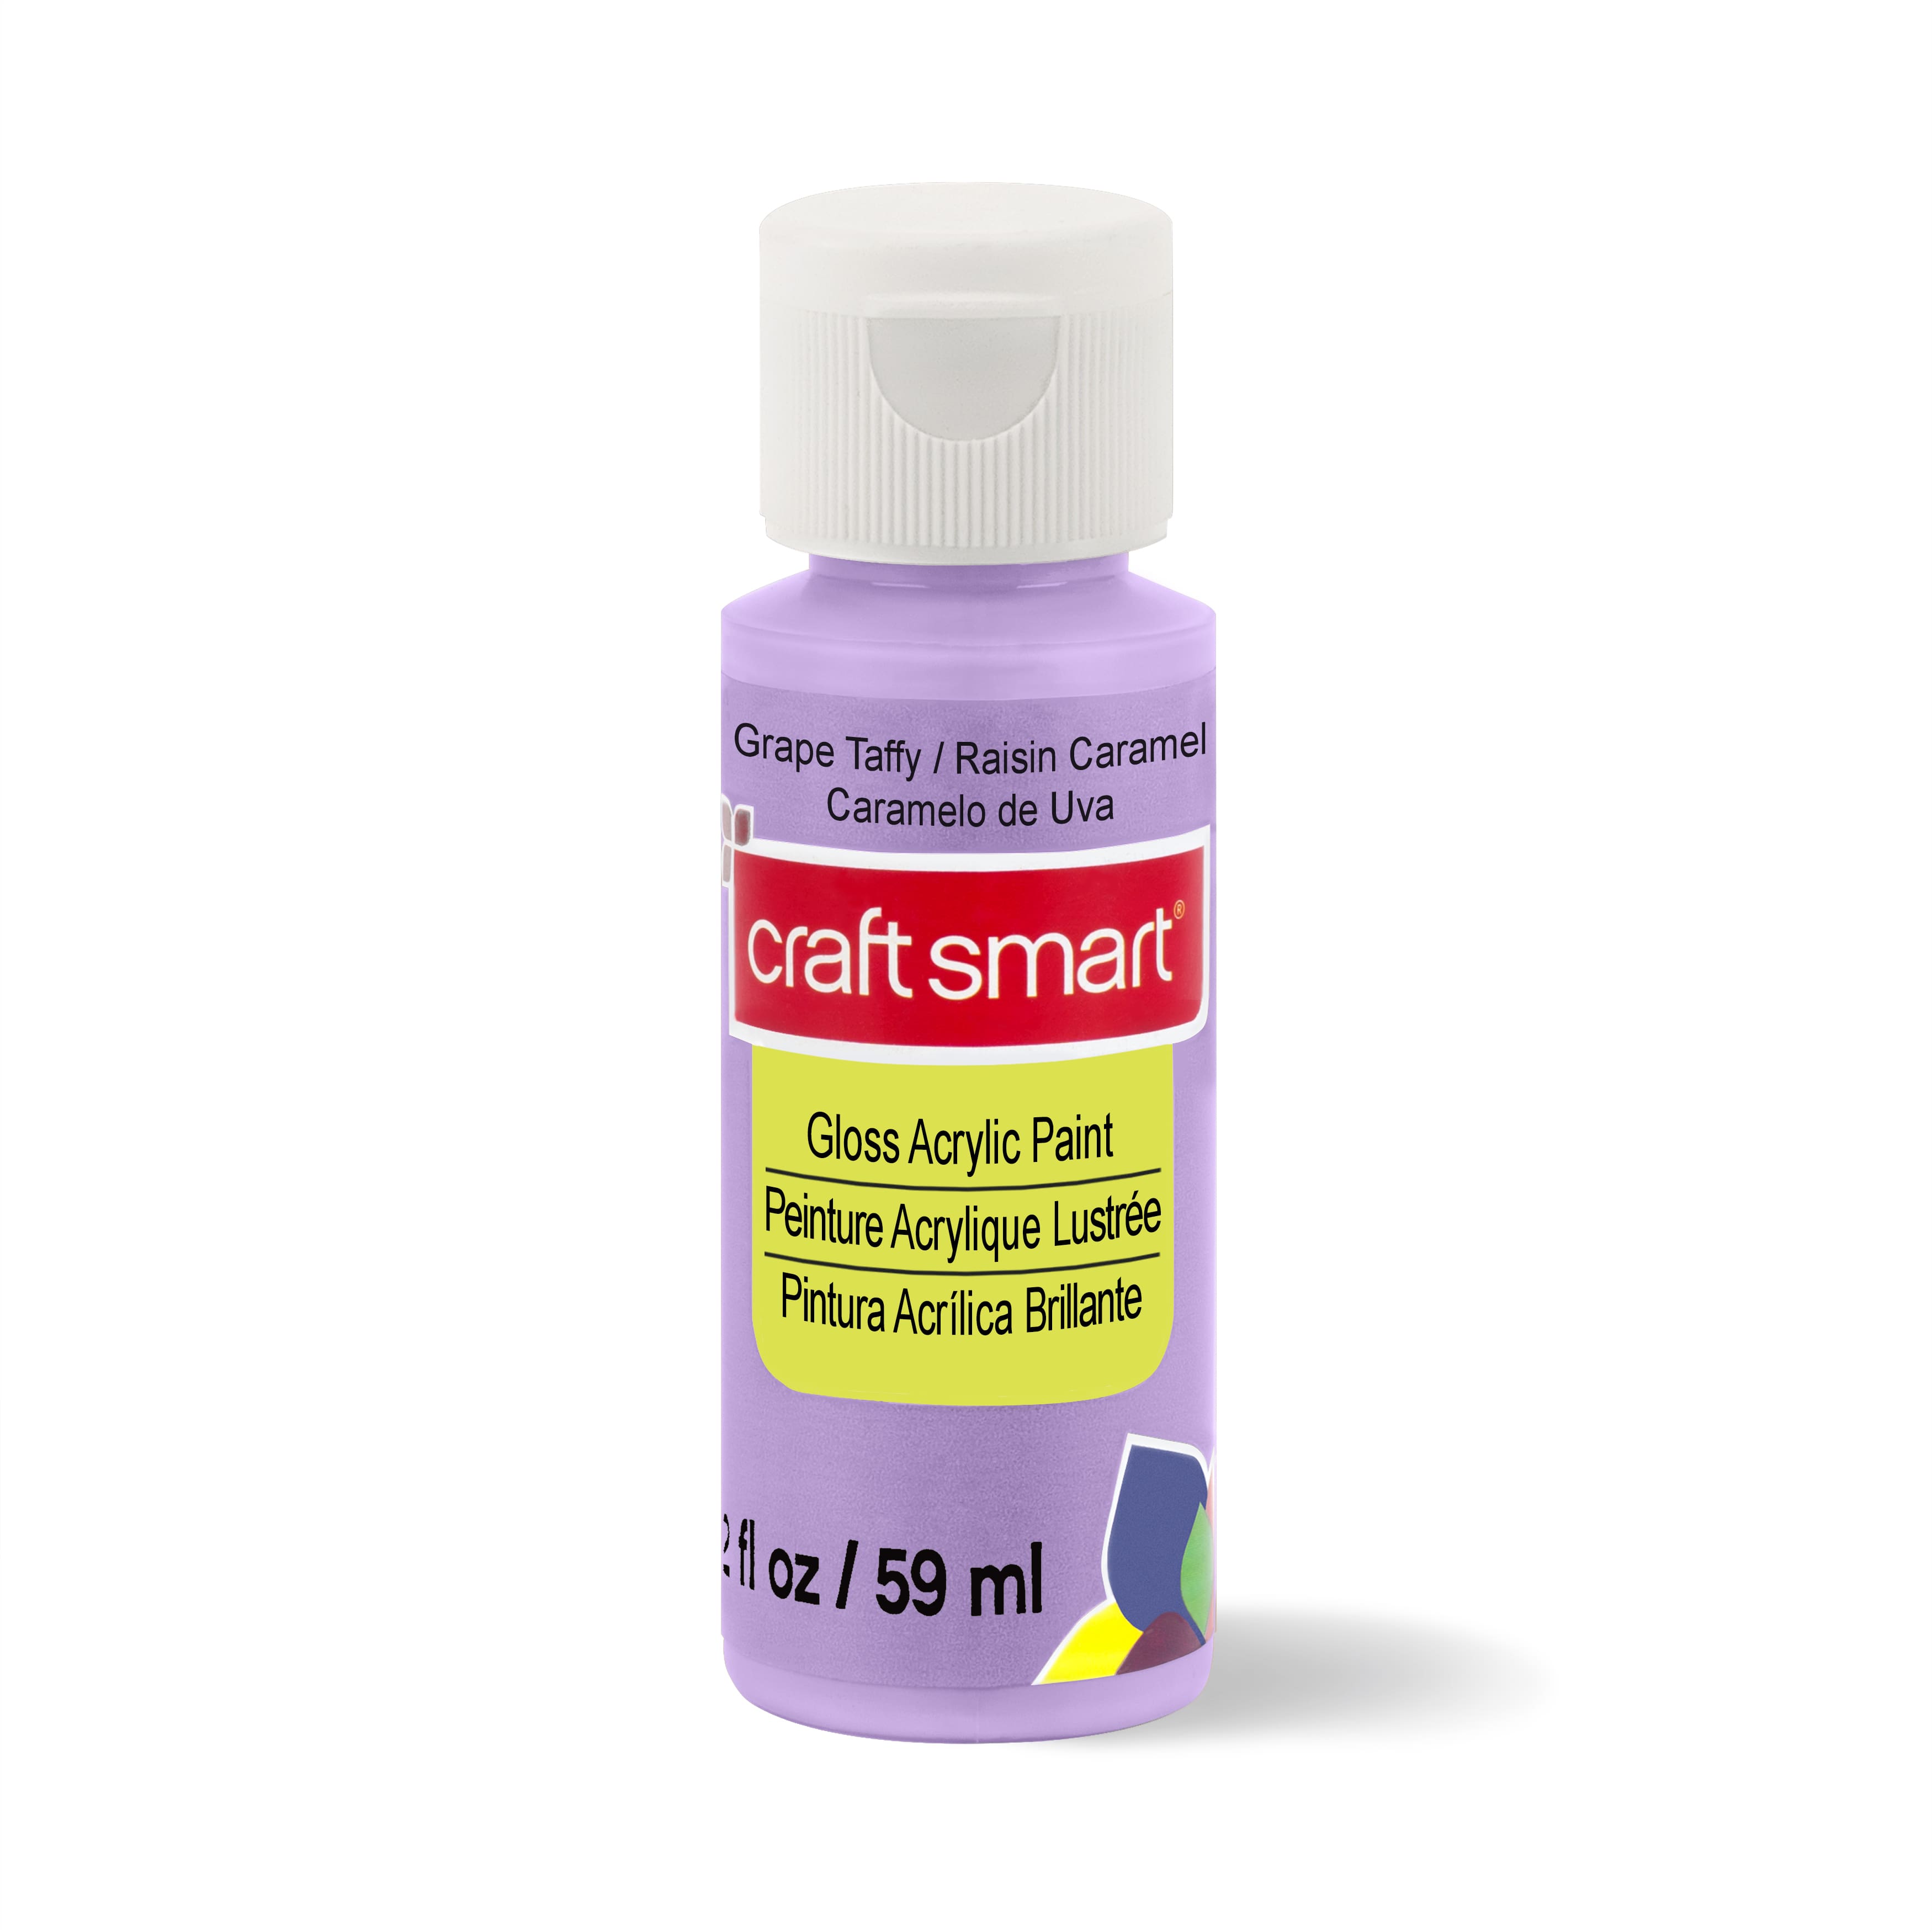 Gloss Acrylic Paint by Craft Smart®, 2oz.